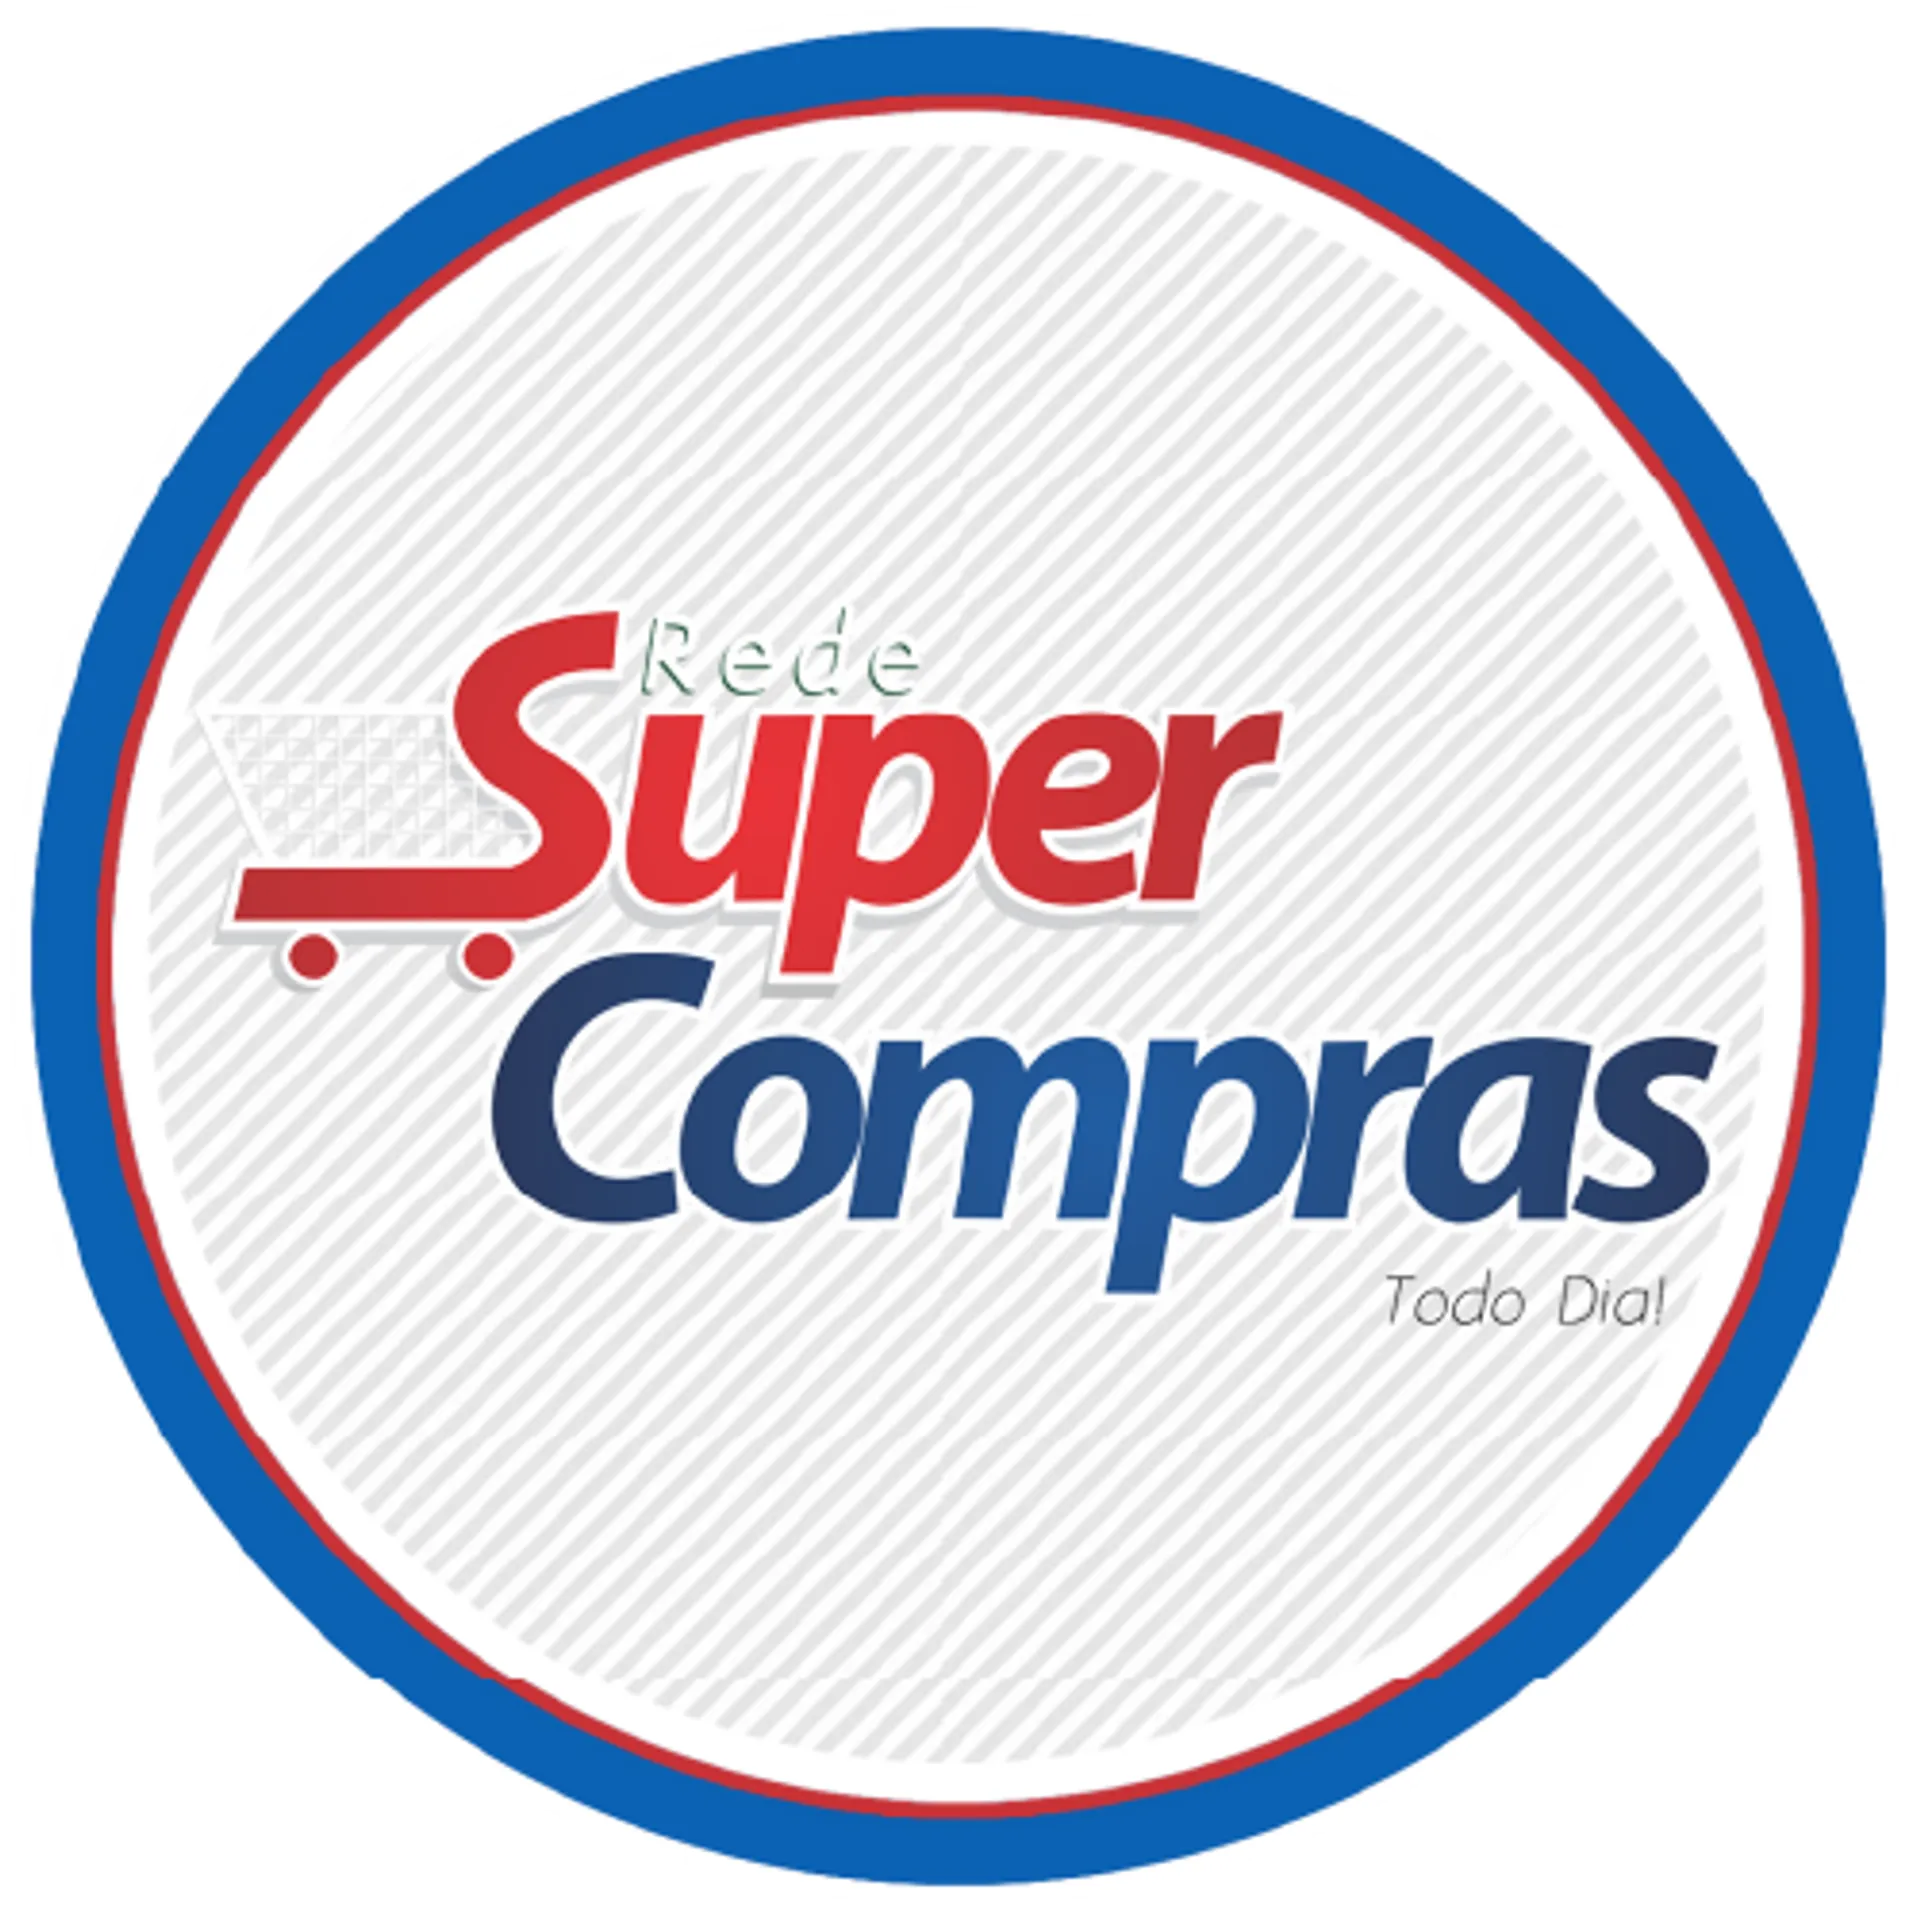 REDE SUPER COMPRAS logo